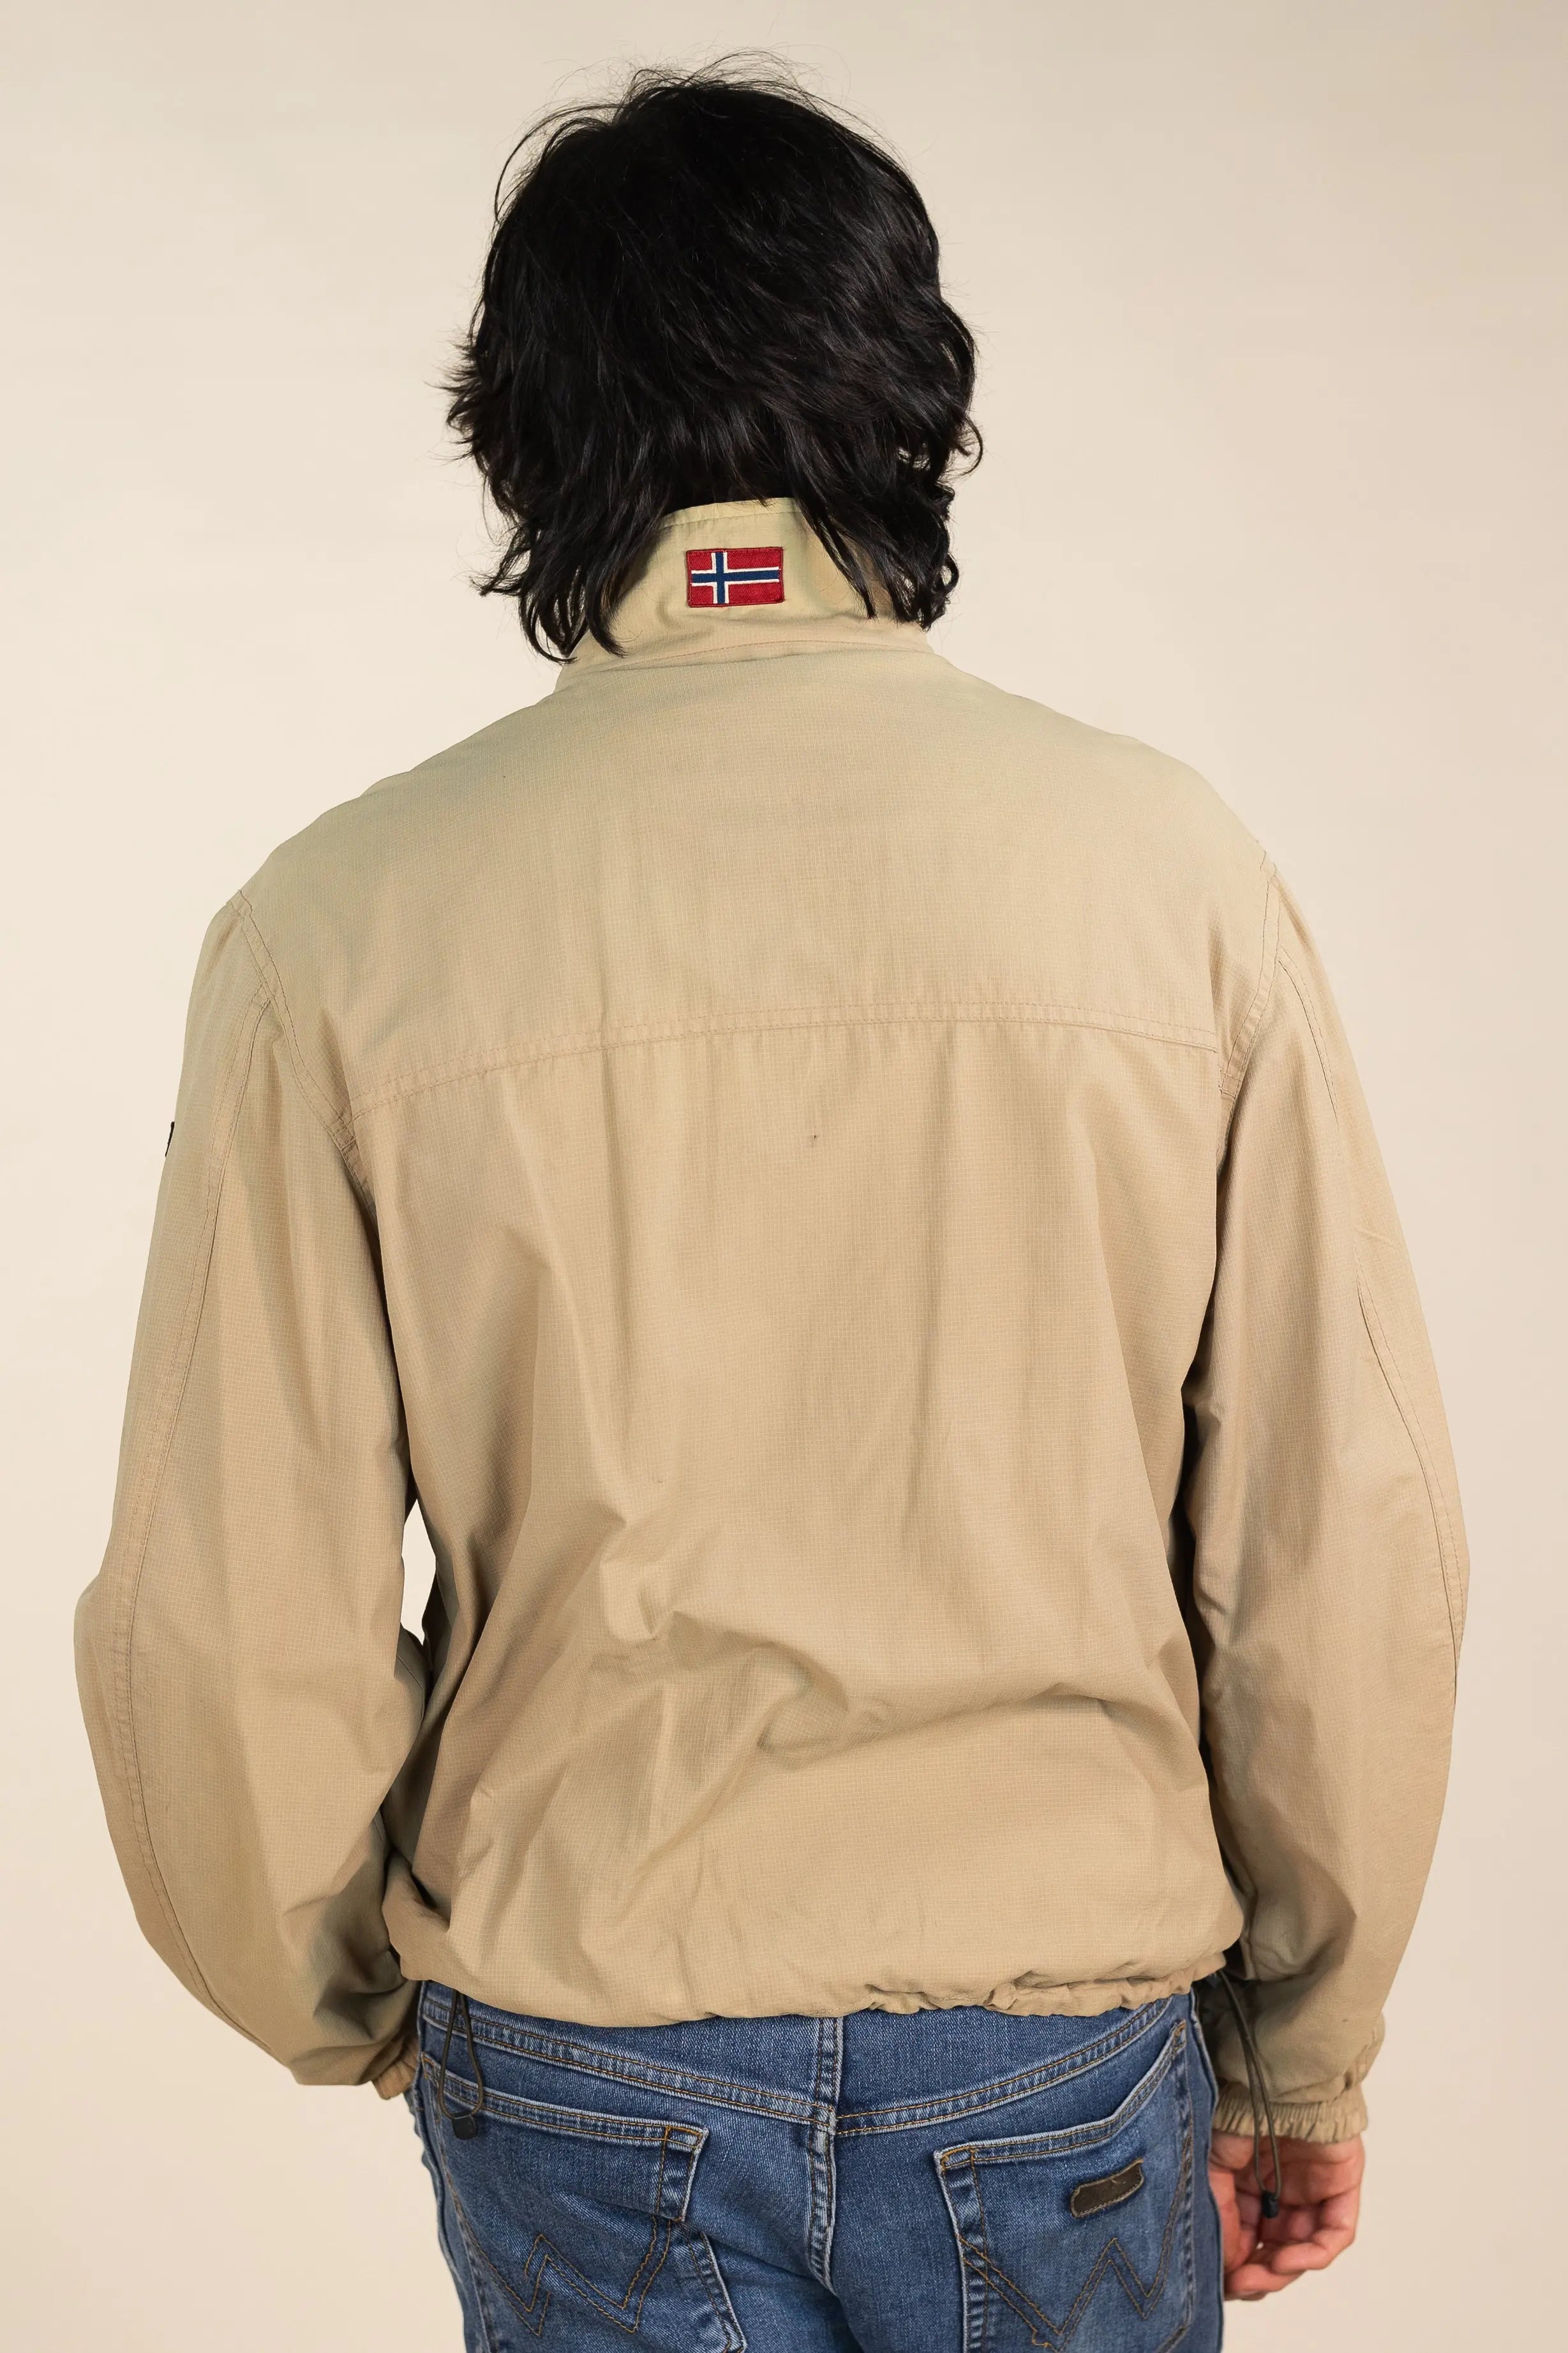 Napapijri - Lightweight Jacket- ThriftTale.com - Vintage and second handclothing